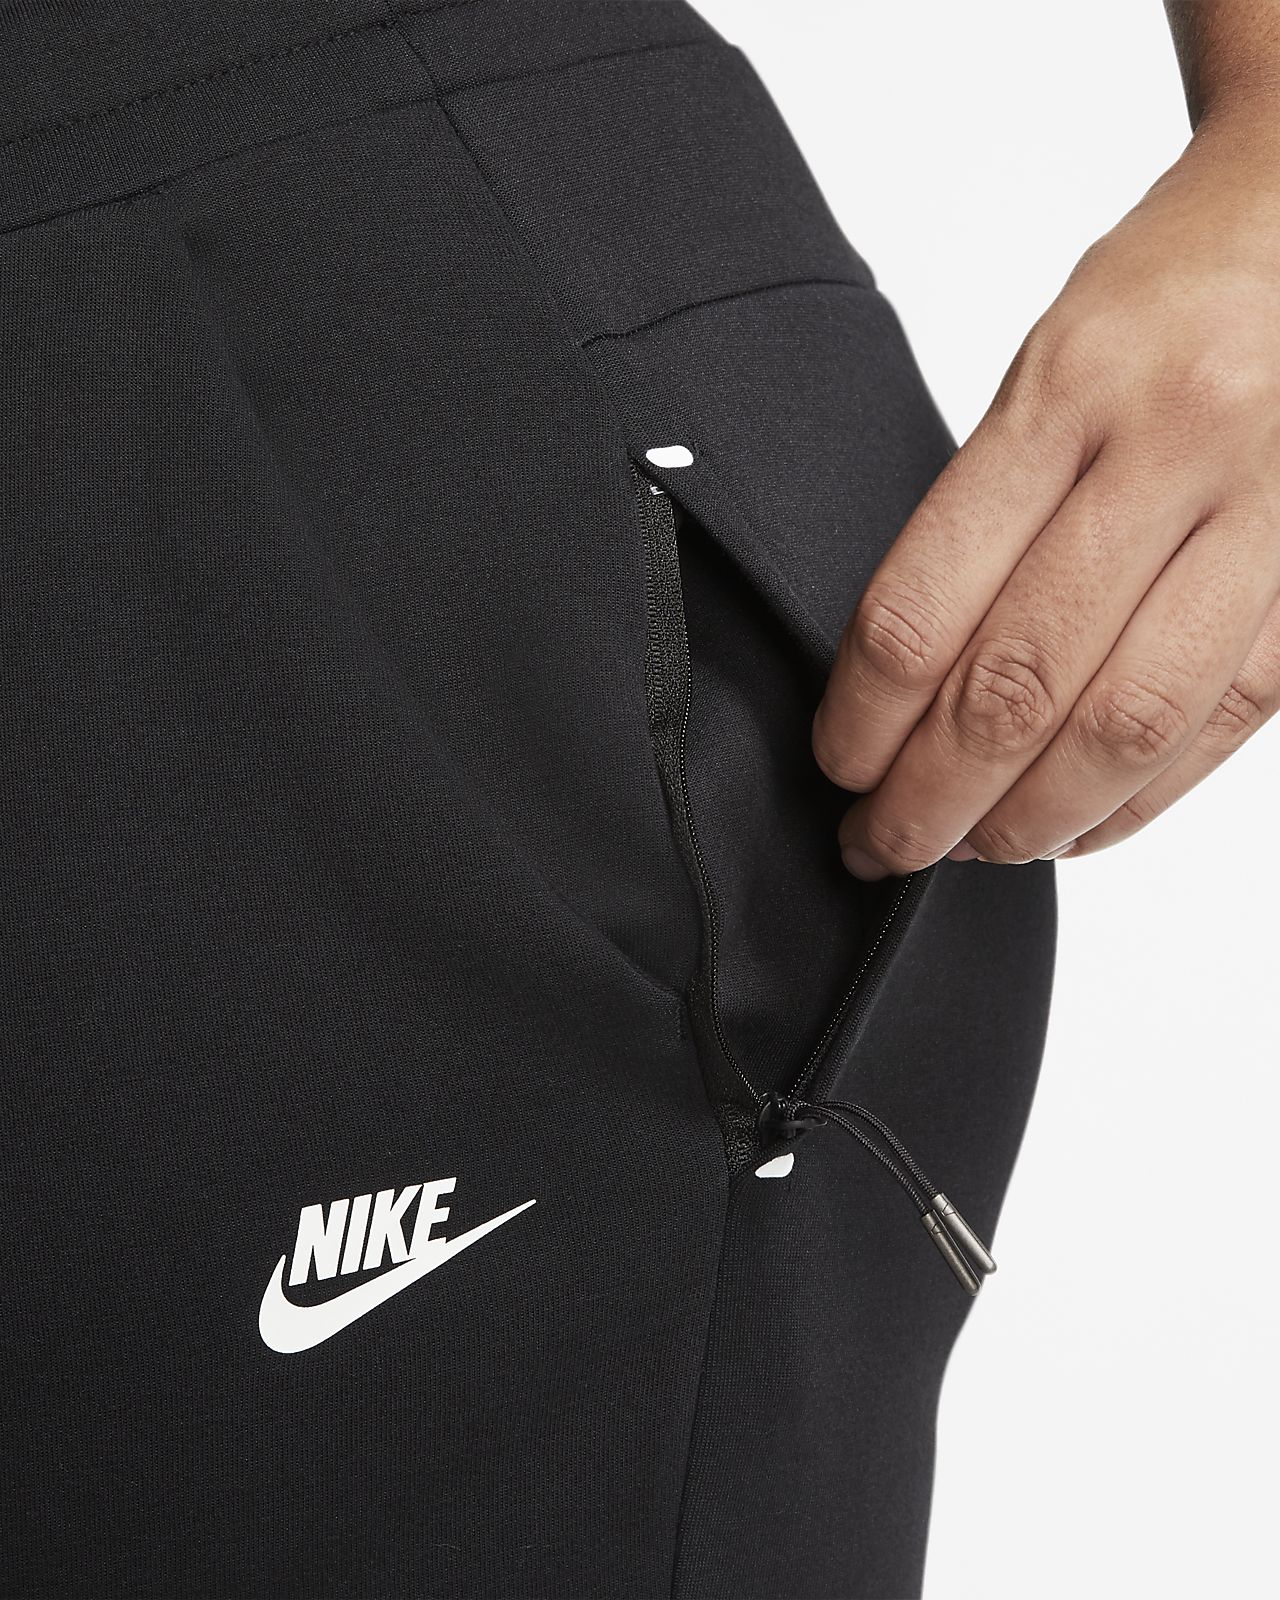 nike sweat shorts with zipper pockets